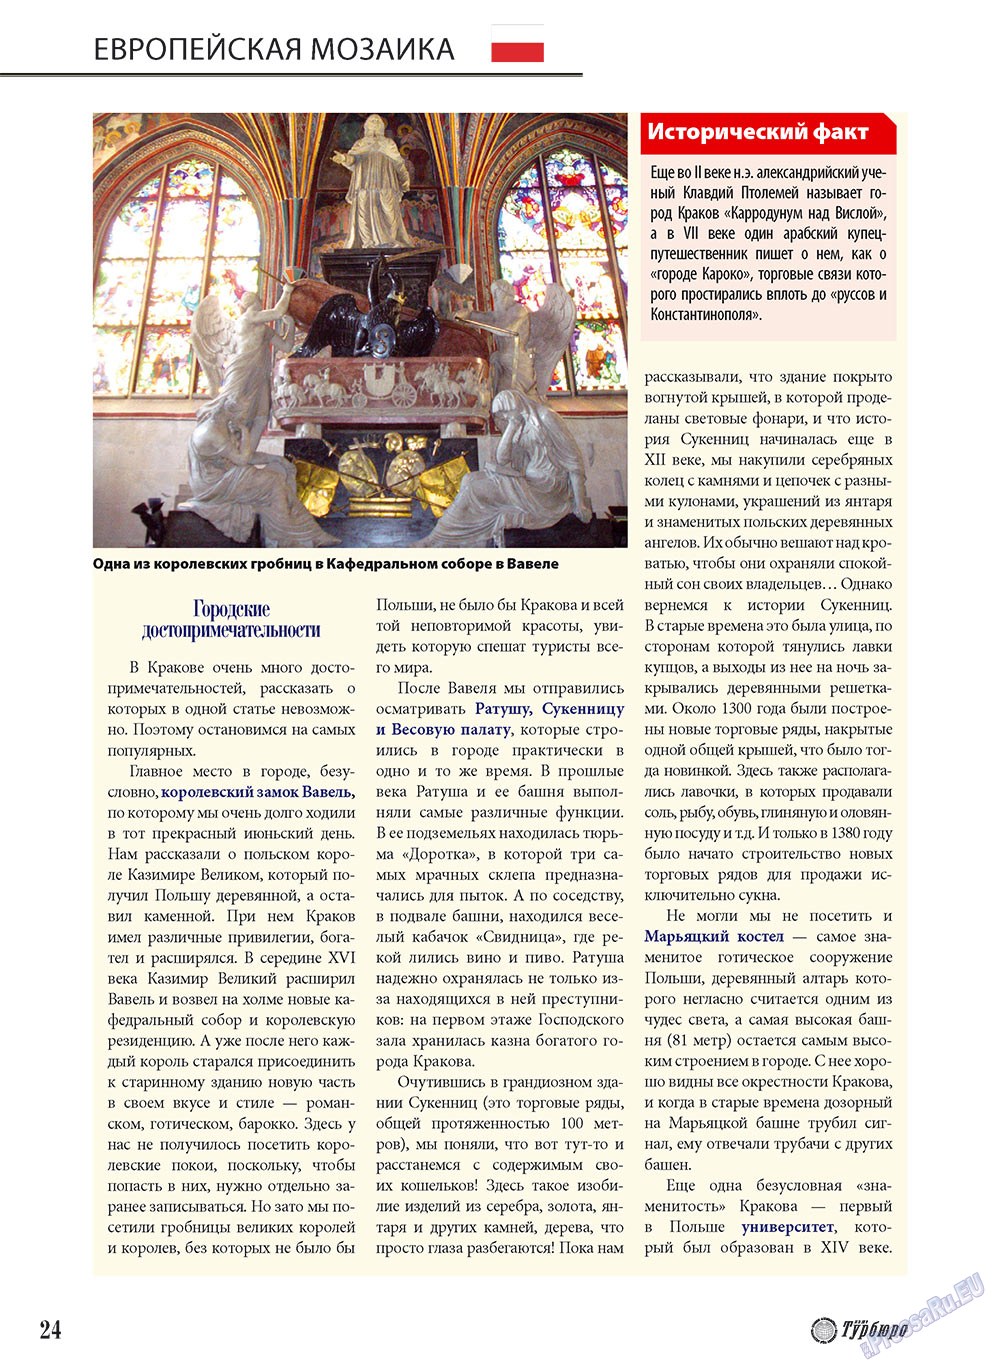 Наше Турбюро (журнал). 2010 год, номер 3, стр. 24